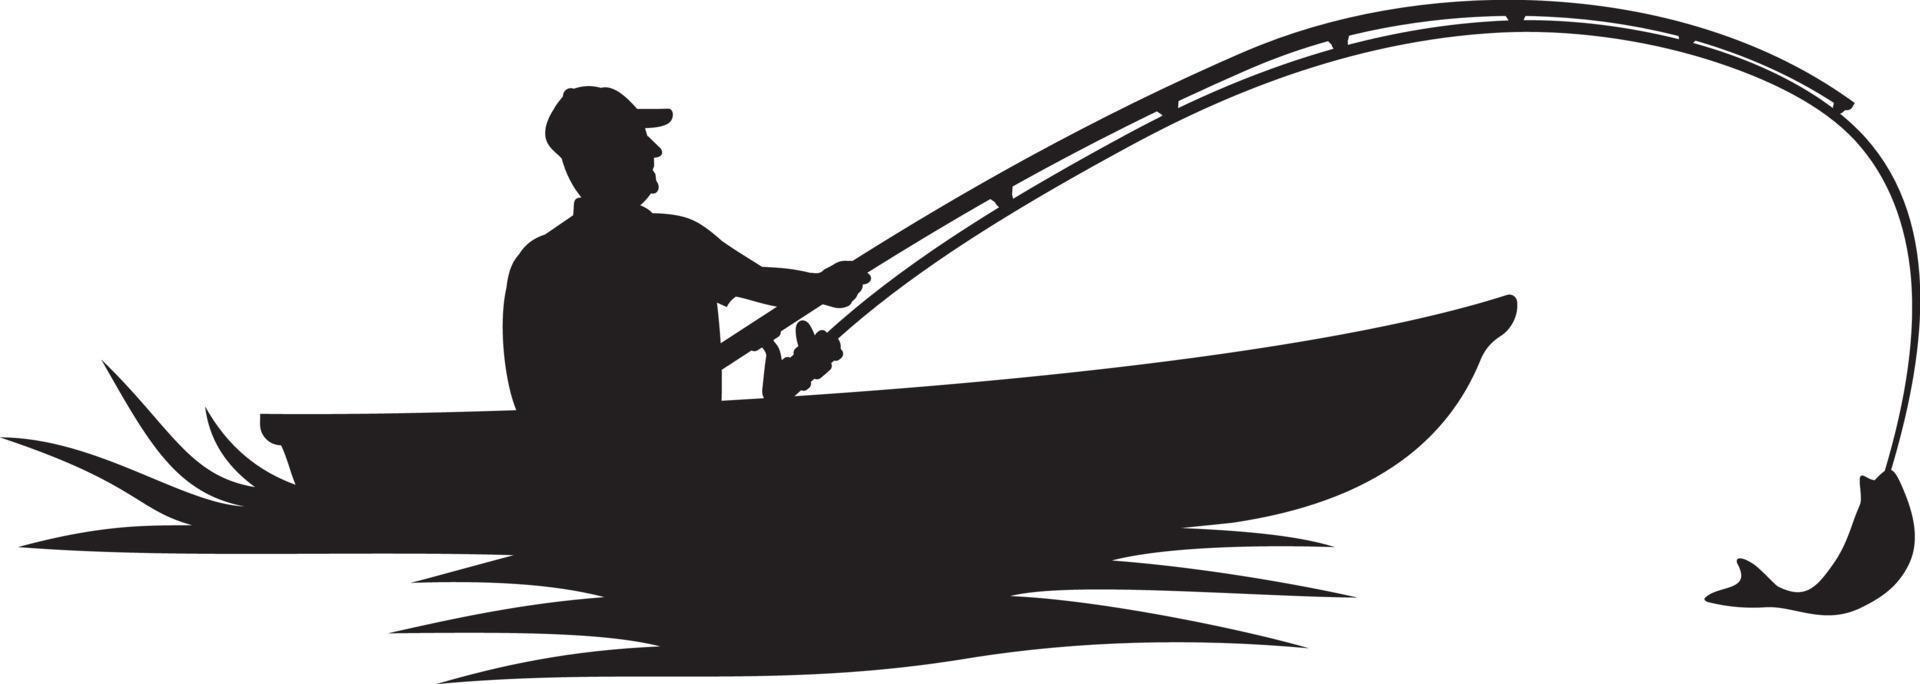 Fisherman in boat silhouette vector